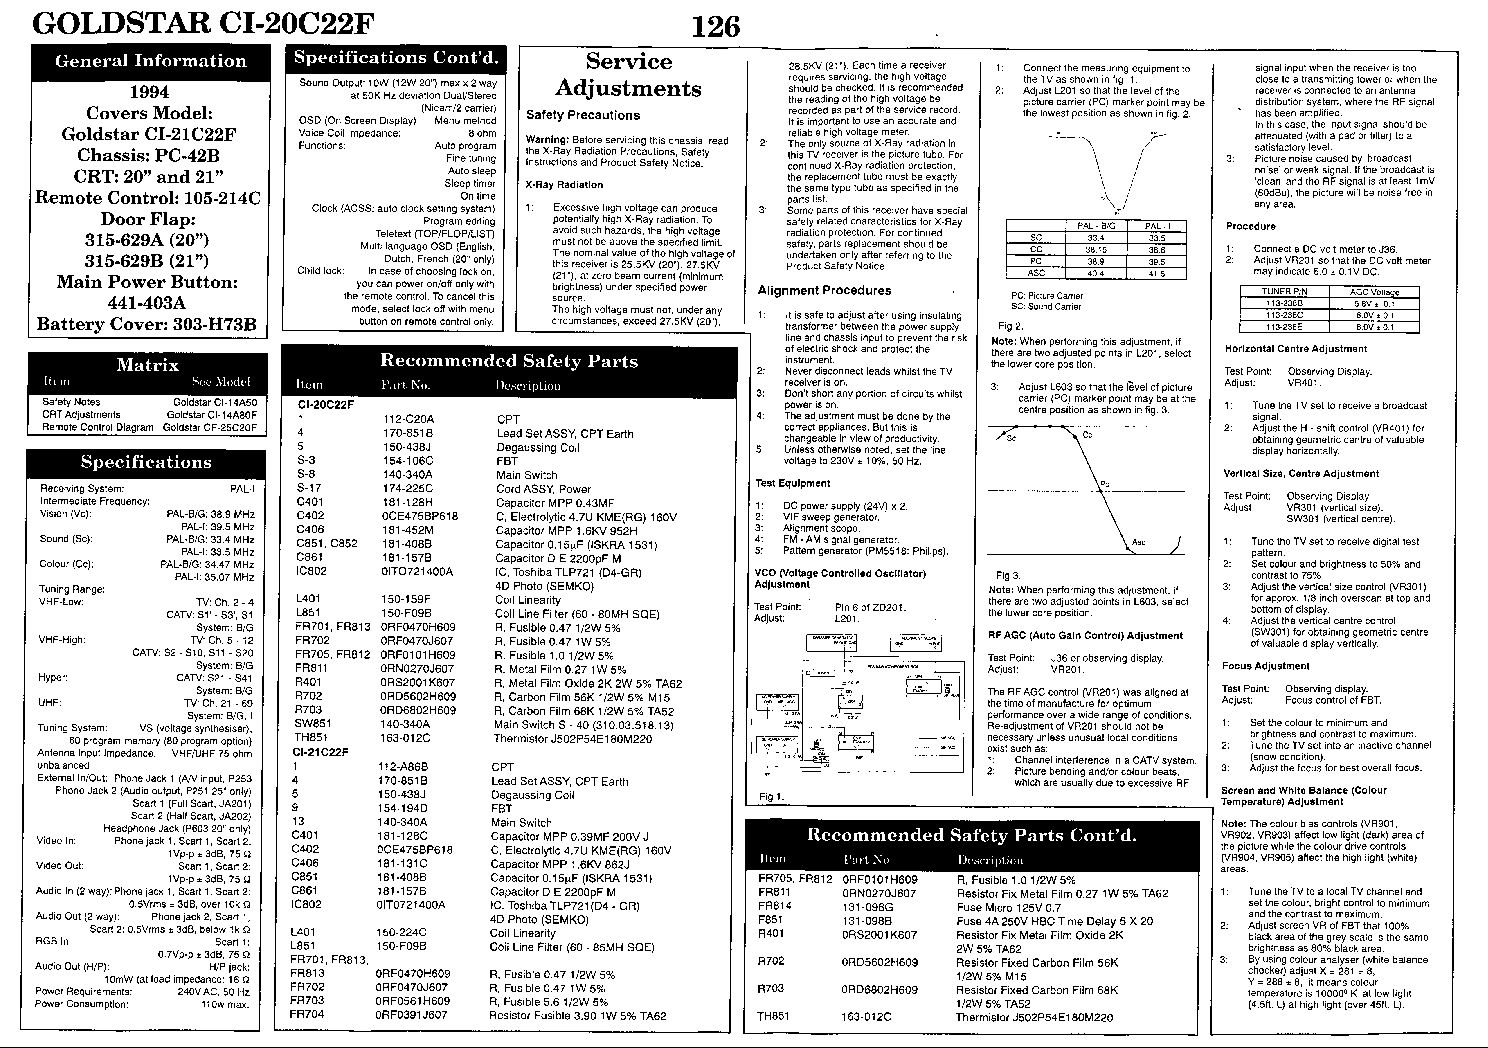 LG CI-20C22F service manual (1st page)